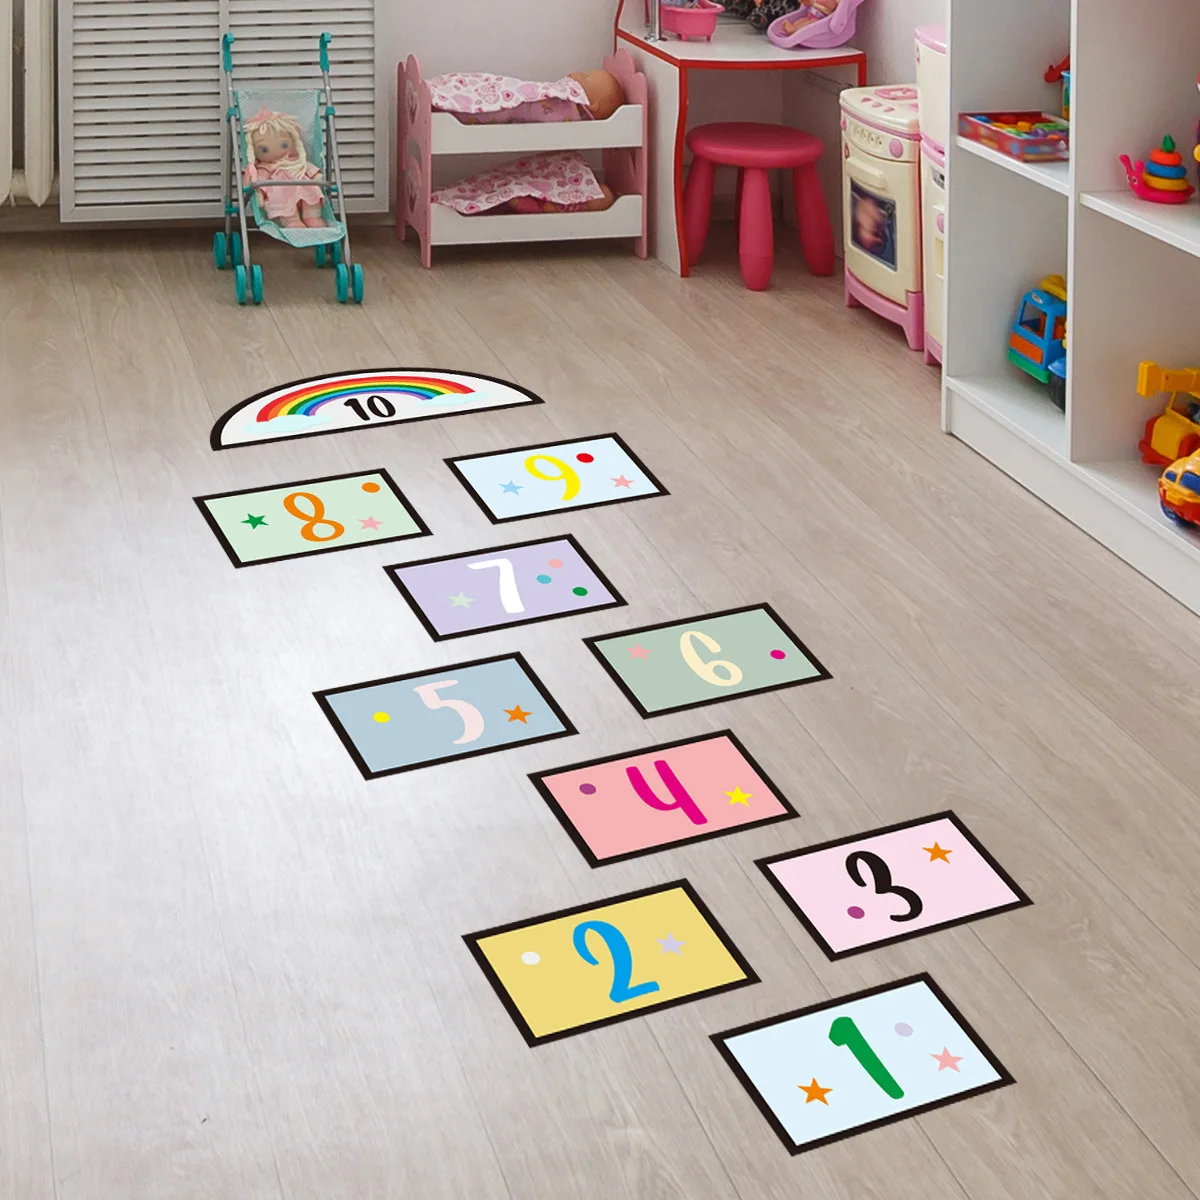 

Cartoon Digital Grid Kids Children Game Floor Stickers Hopscotch Jump Plaid Number Indoor Playroom Decals Baby Room Home Decor